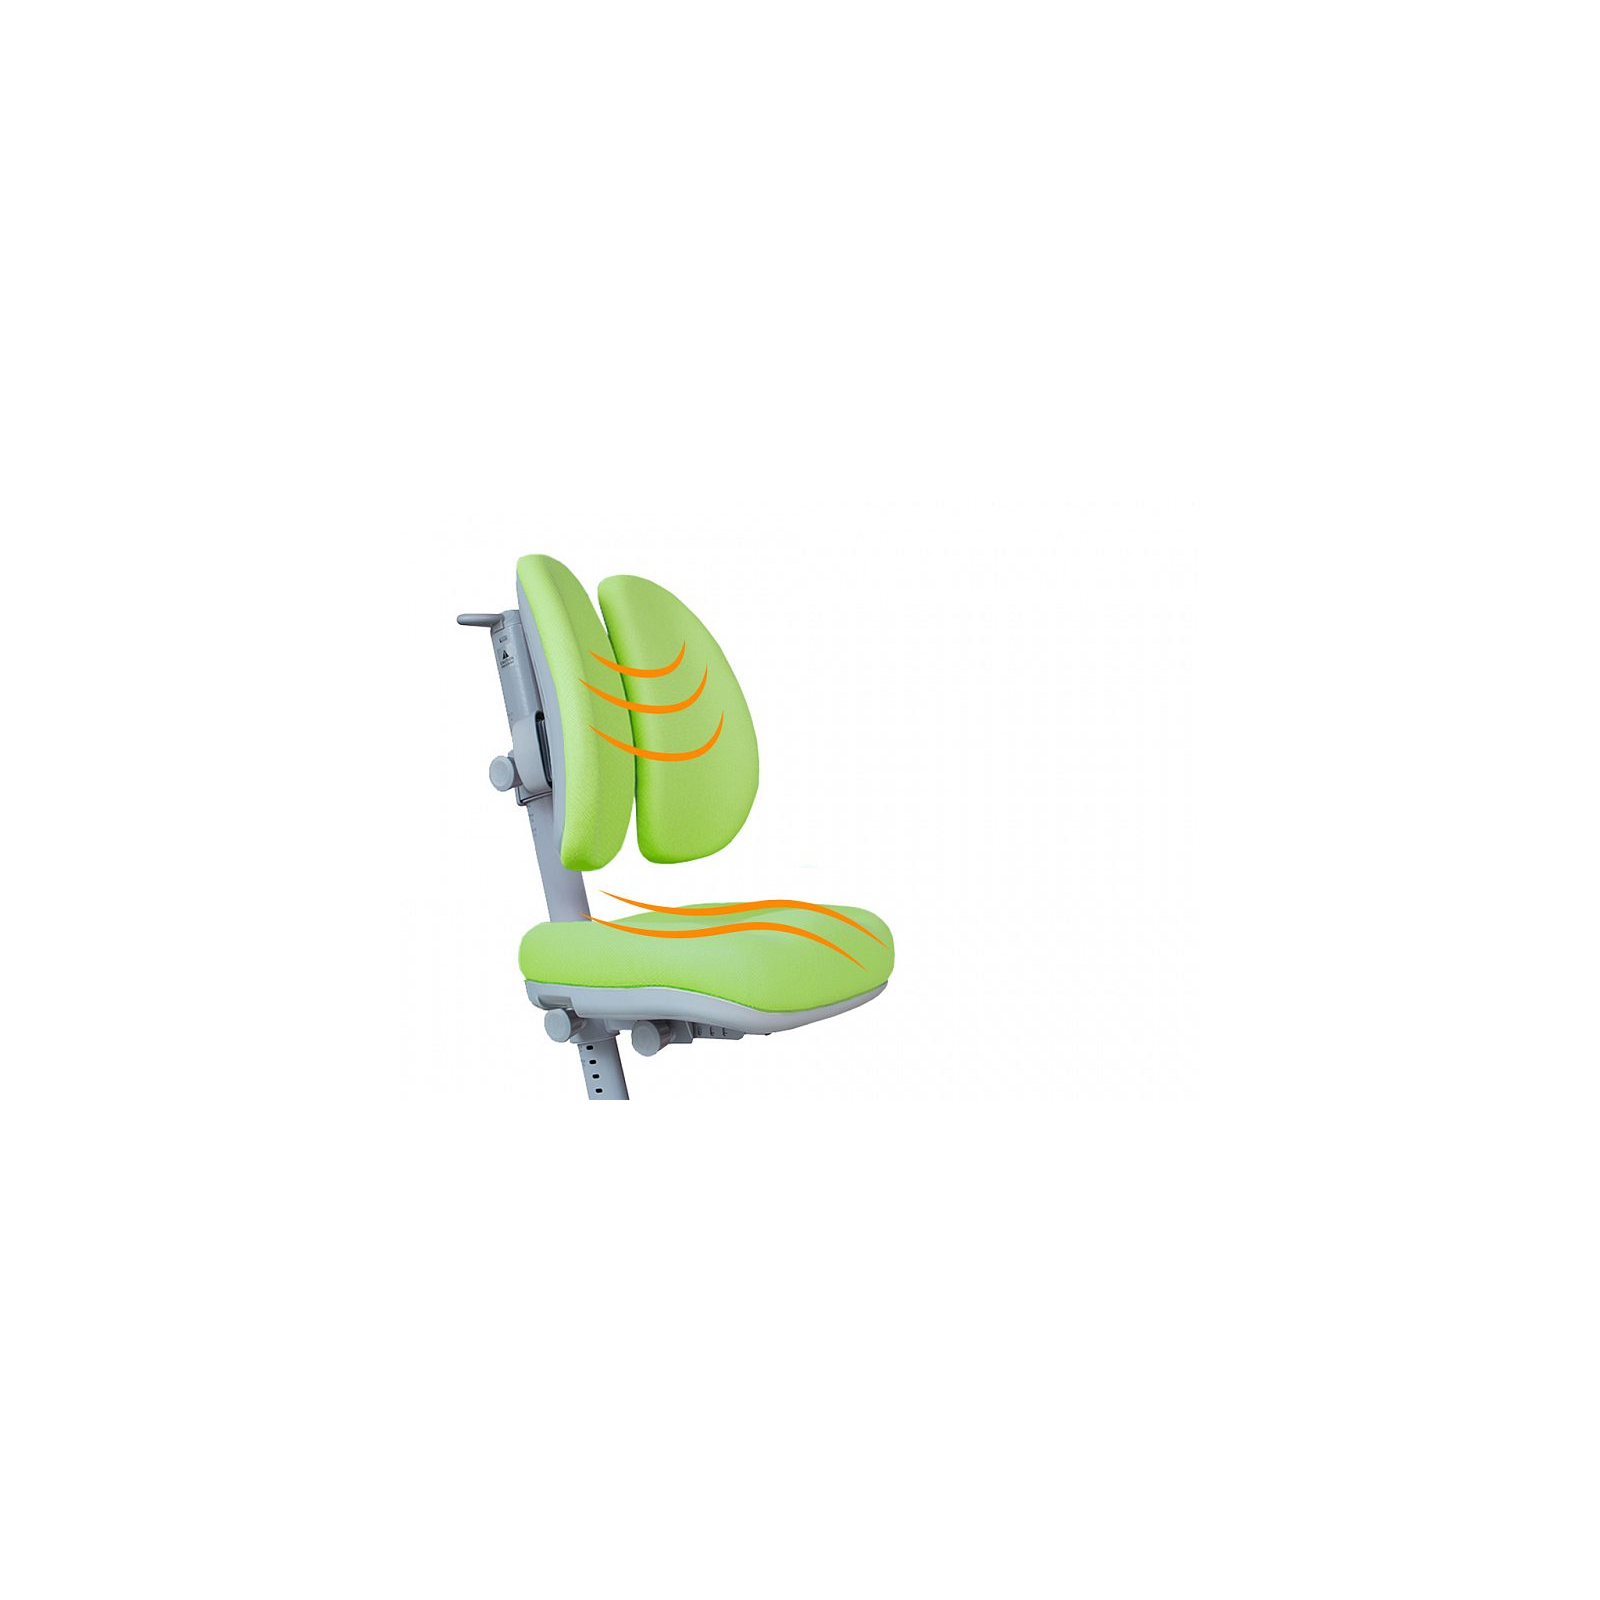 Дитяче крісло Mealux Onyx Duo TG (Y-115 TG) зображення 2